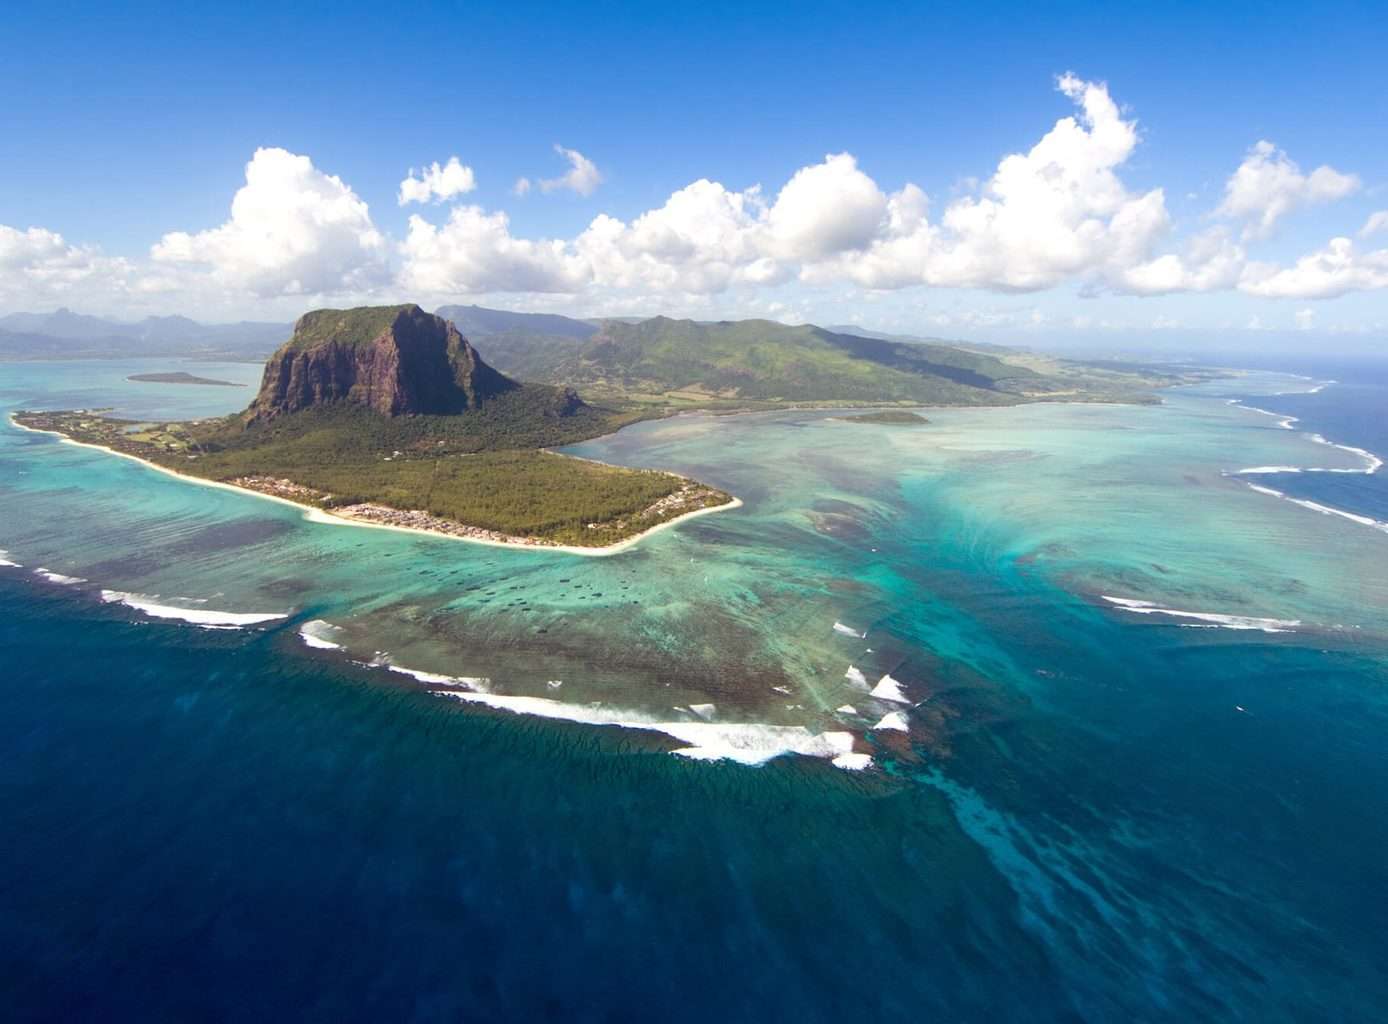 St Regis Mauritius view of the island